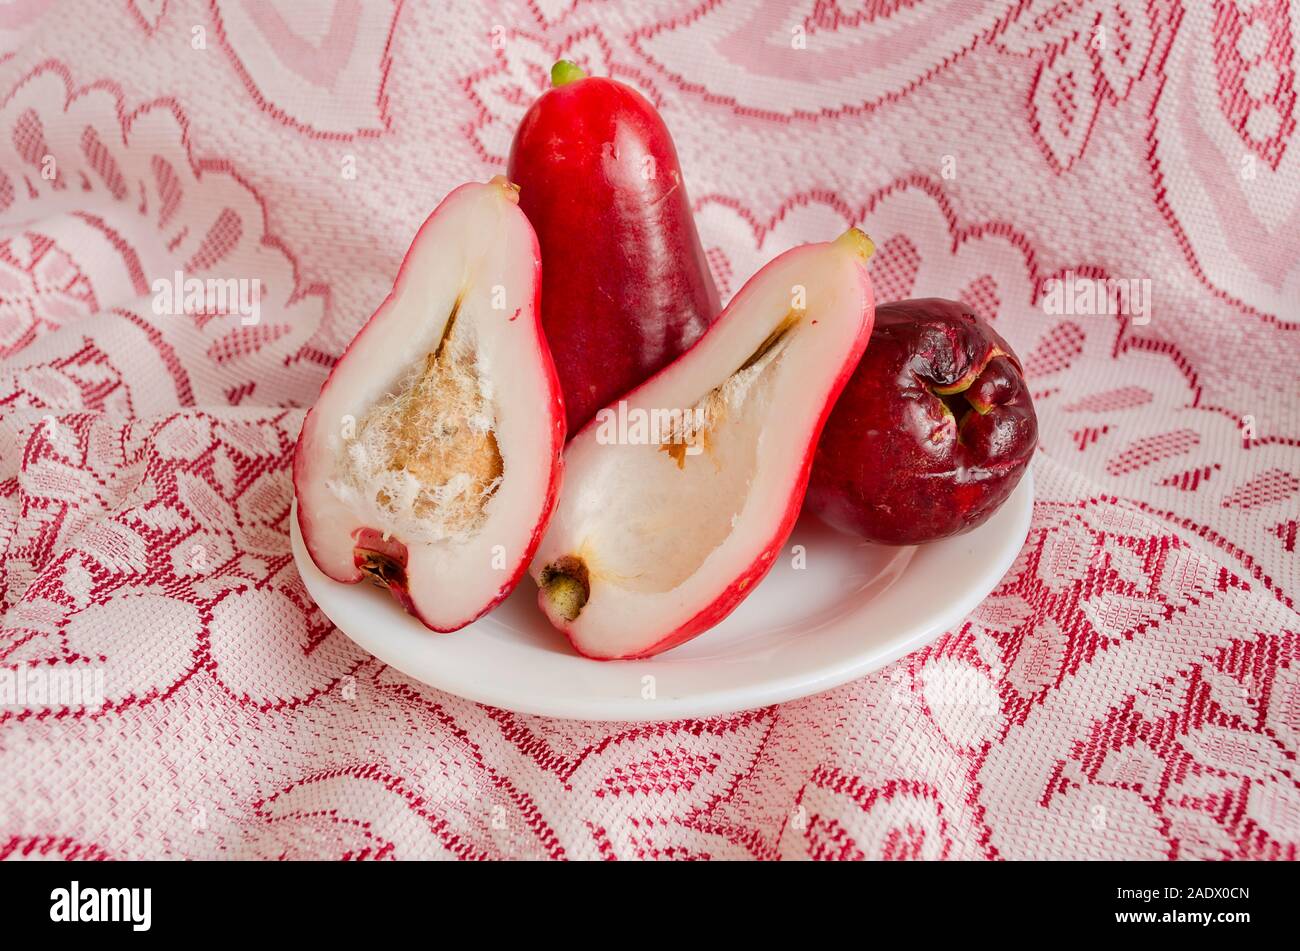 Plateful Of Red Ripe Otaheite Apples Stock Photo